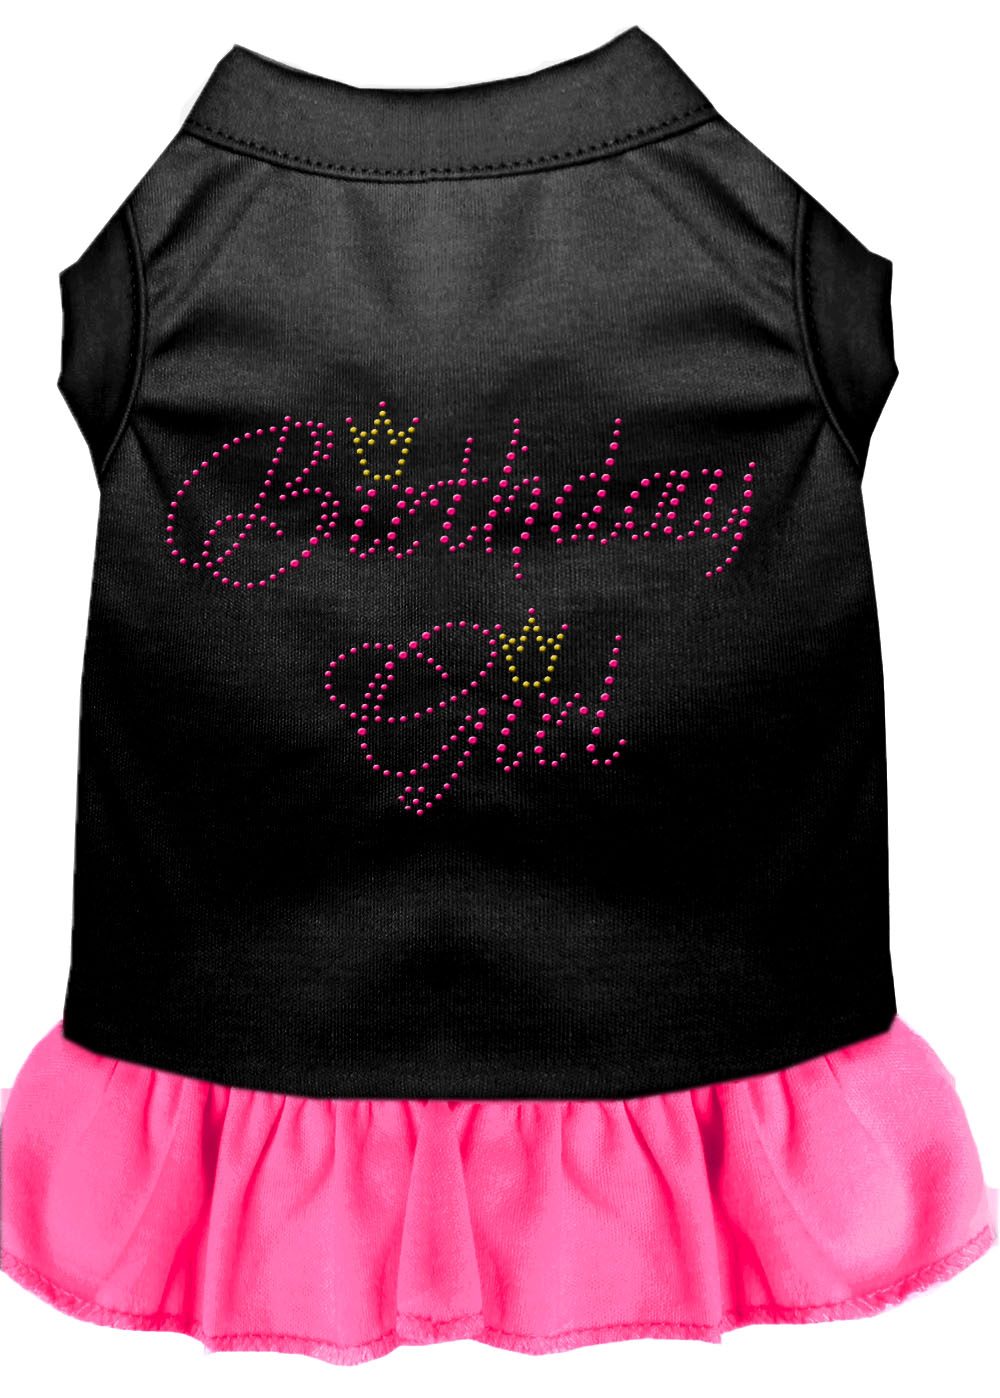 Birthday Girl Rhinestone Dress Black with Bright Pink XS